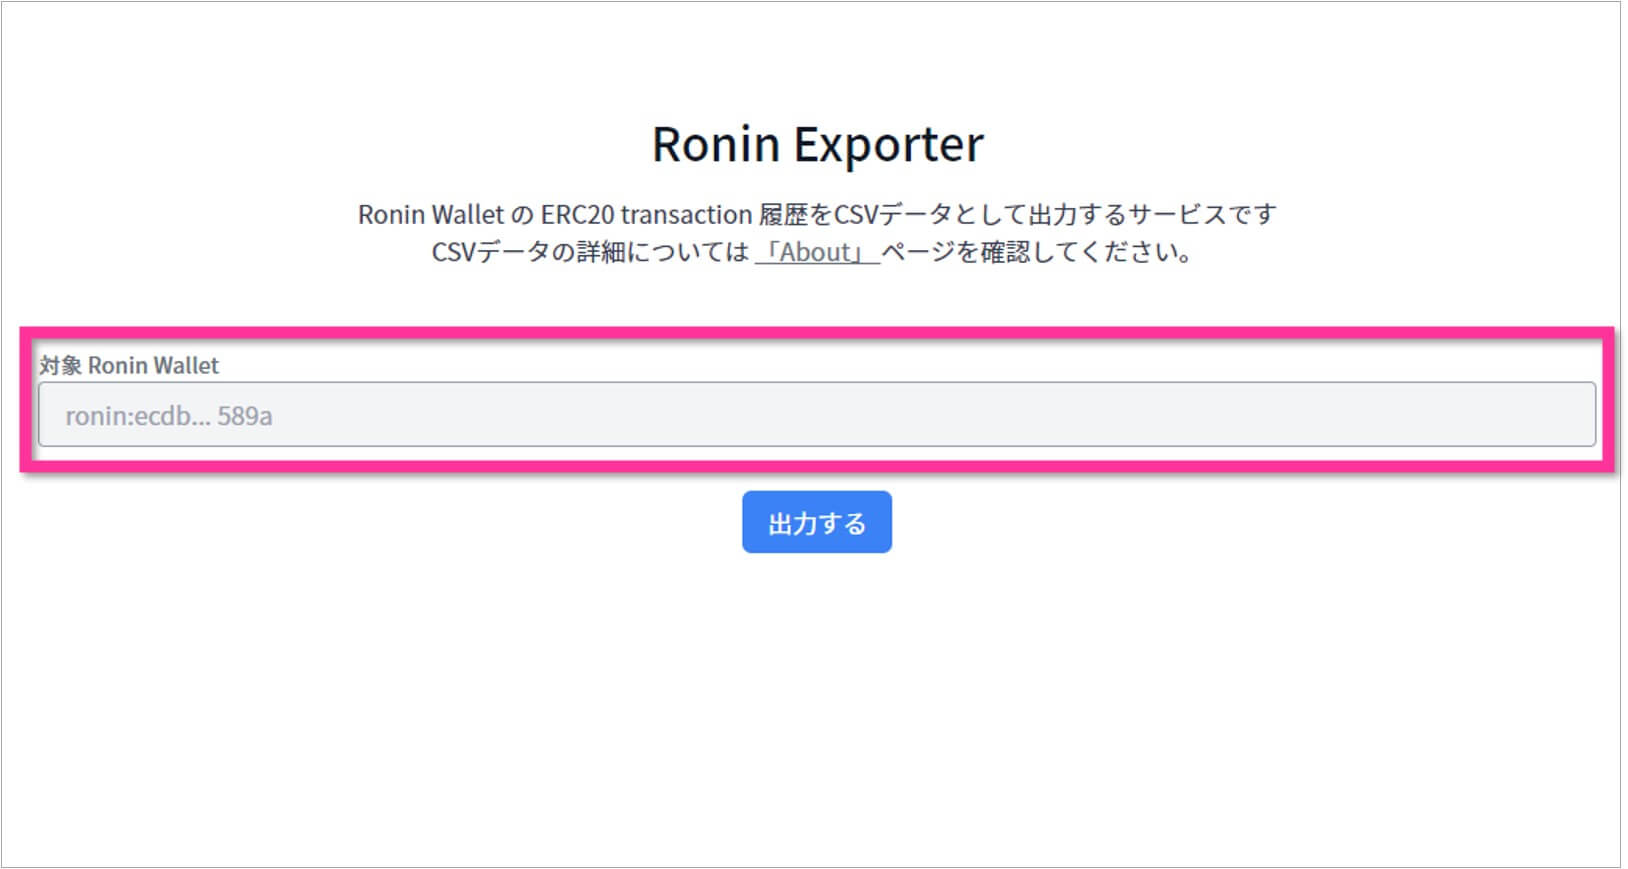 「Ronin Exporter」というサイト